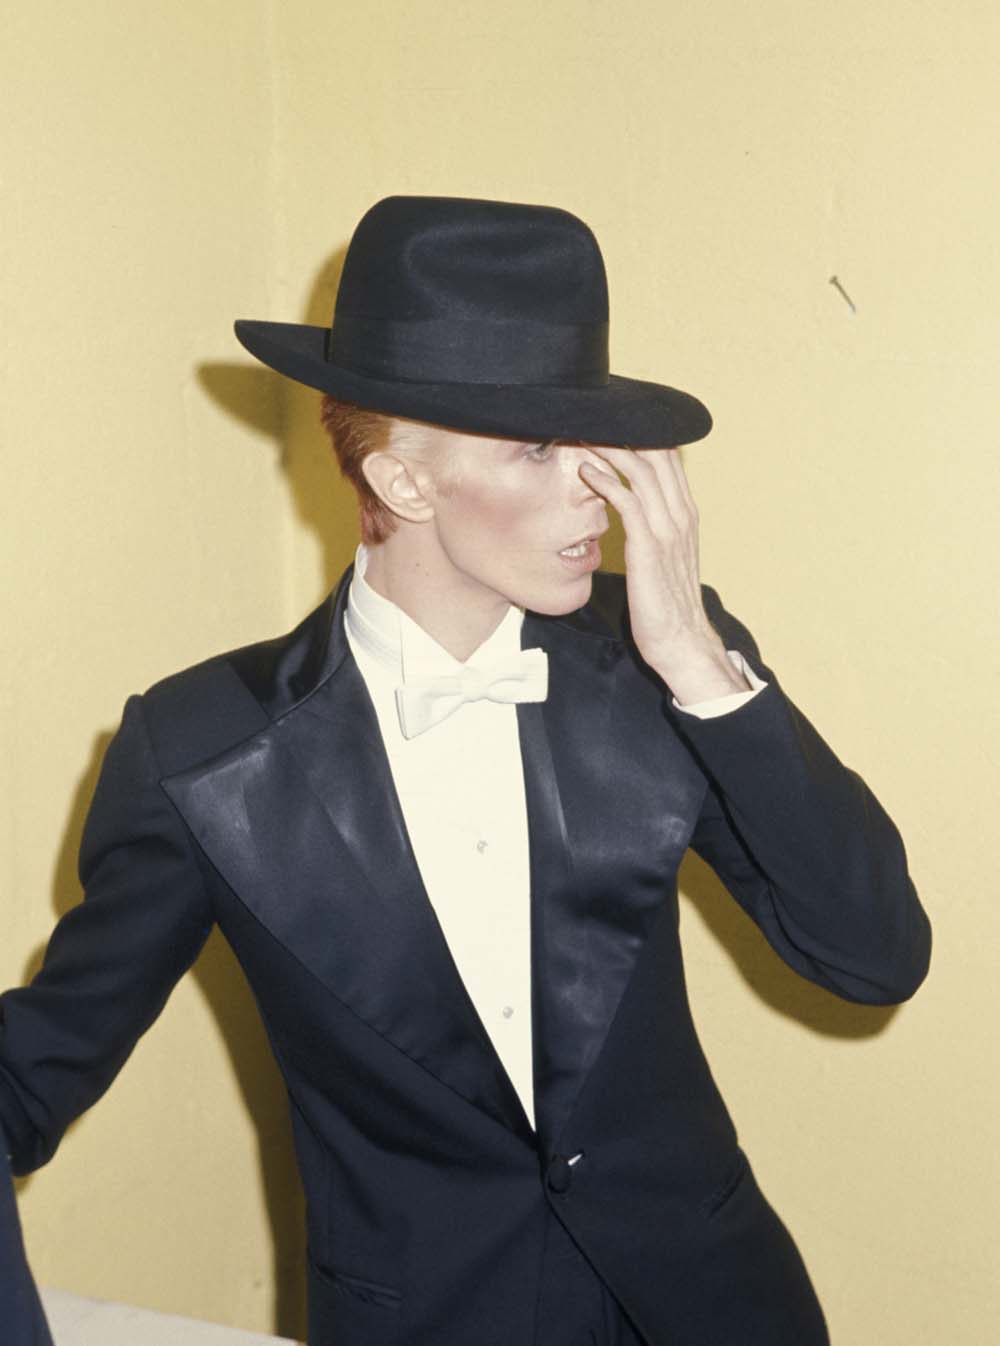 David Bowie in 1975